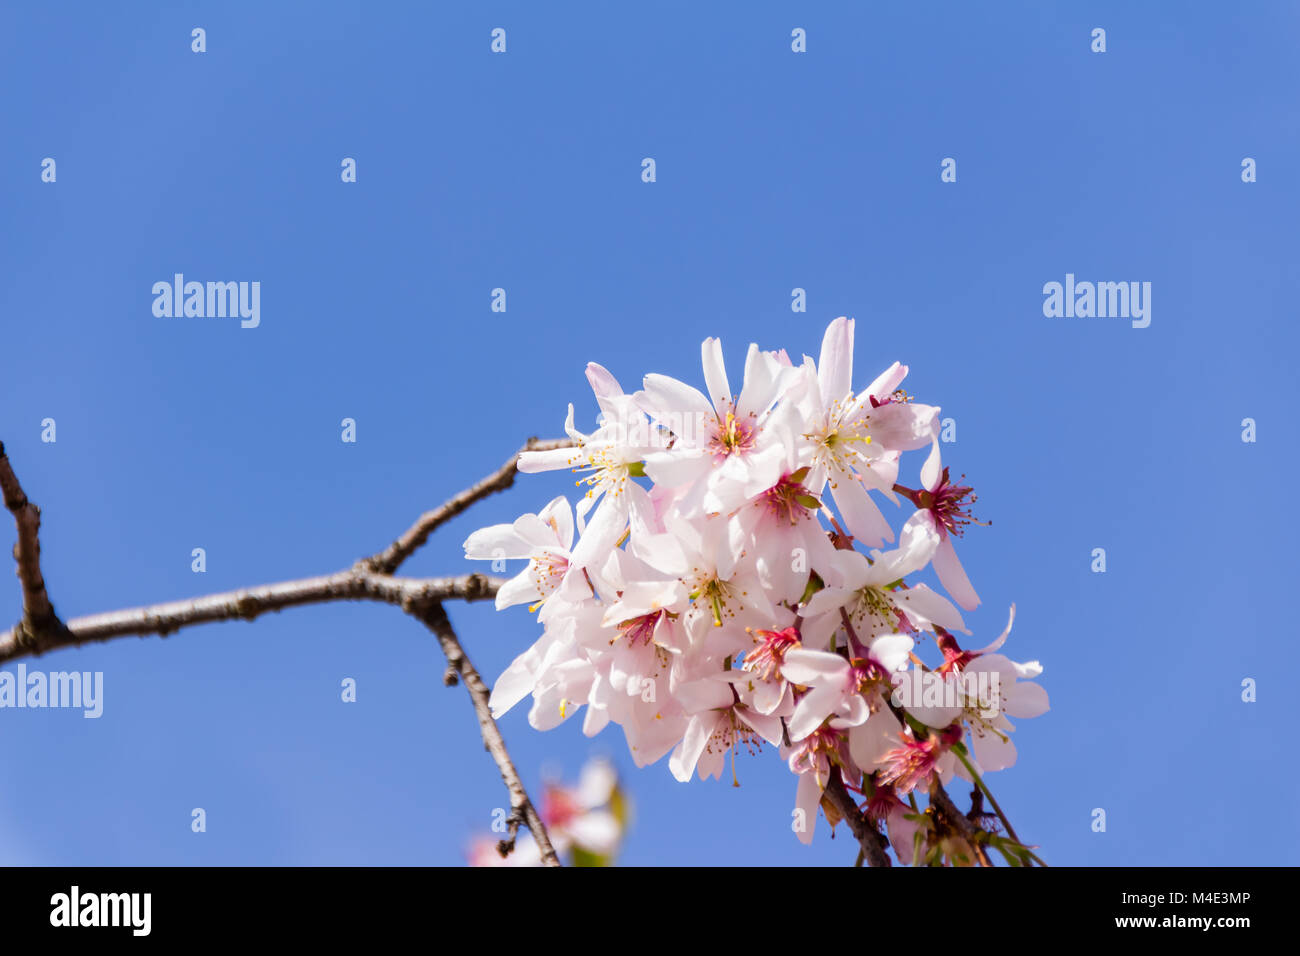 Full bloom in springtime of cherry blossom trees Stock Photo